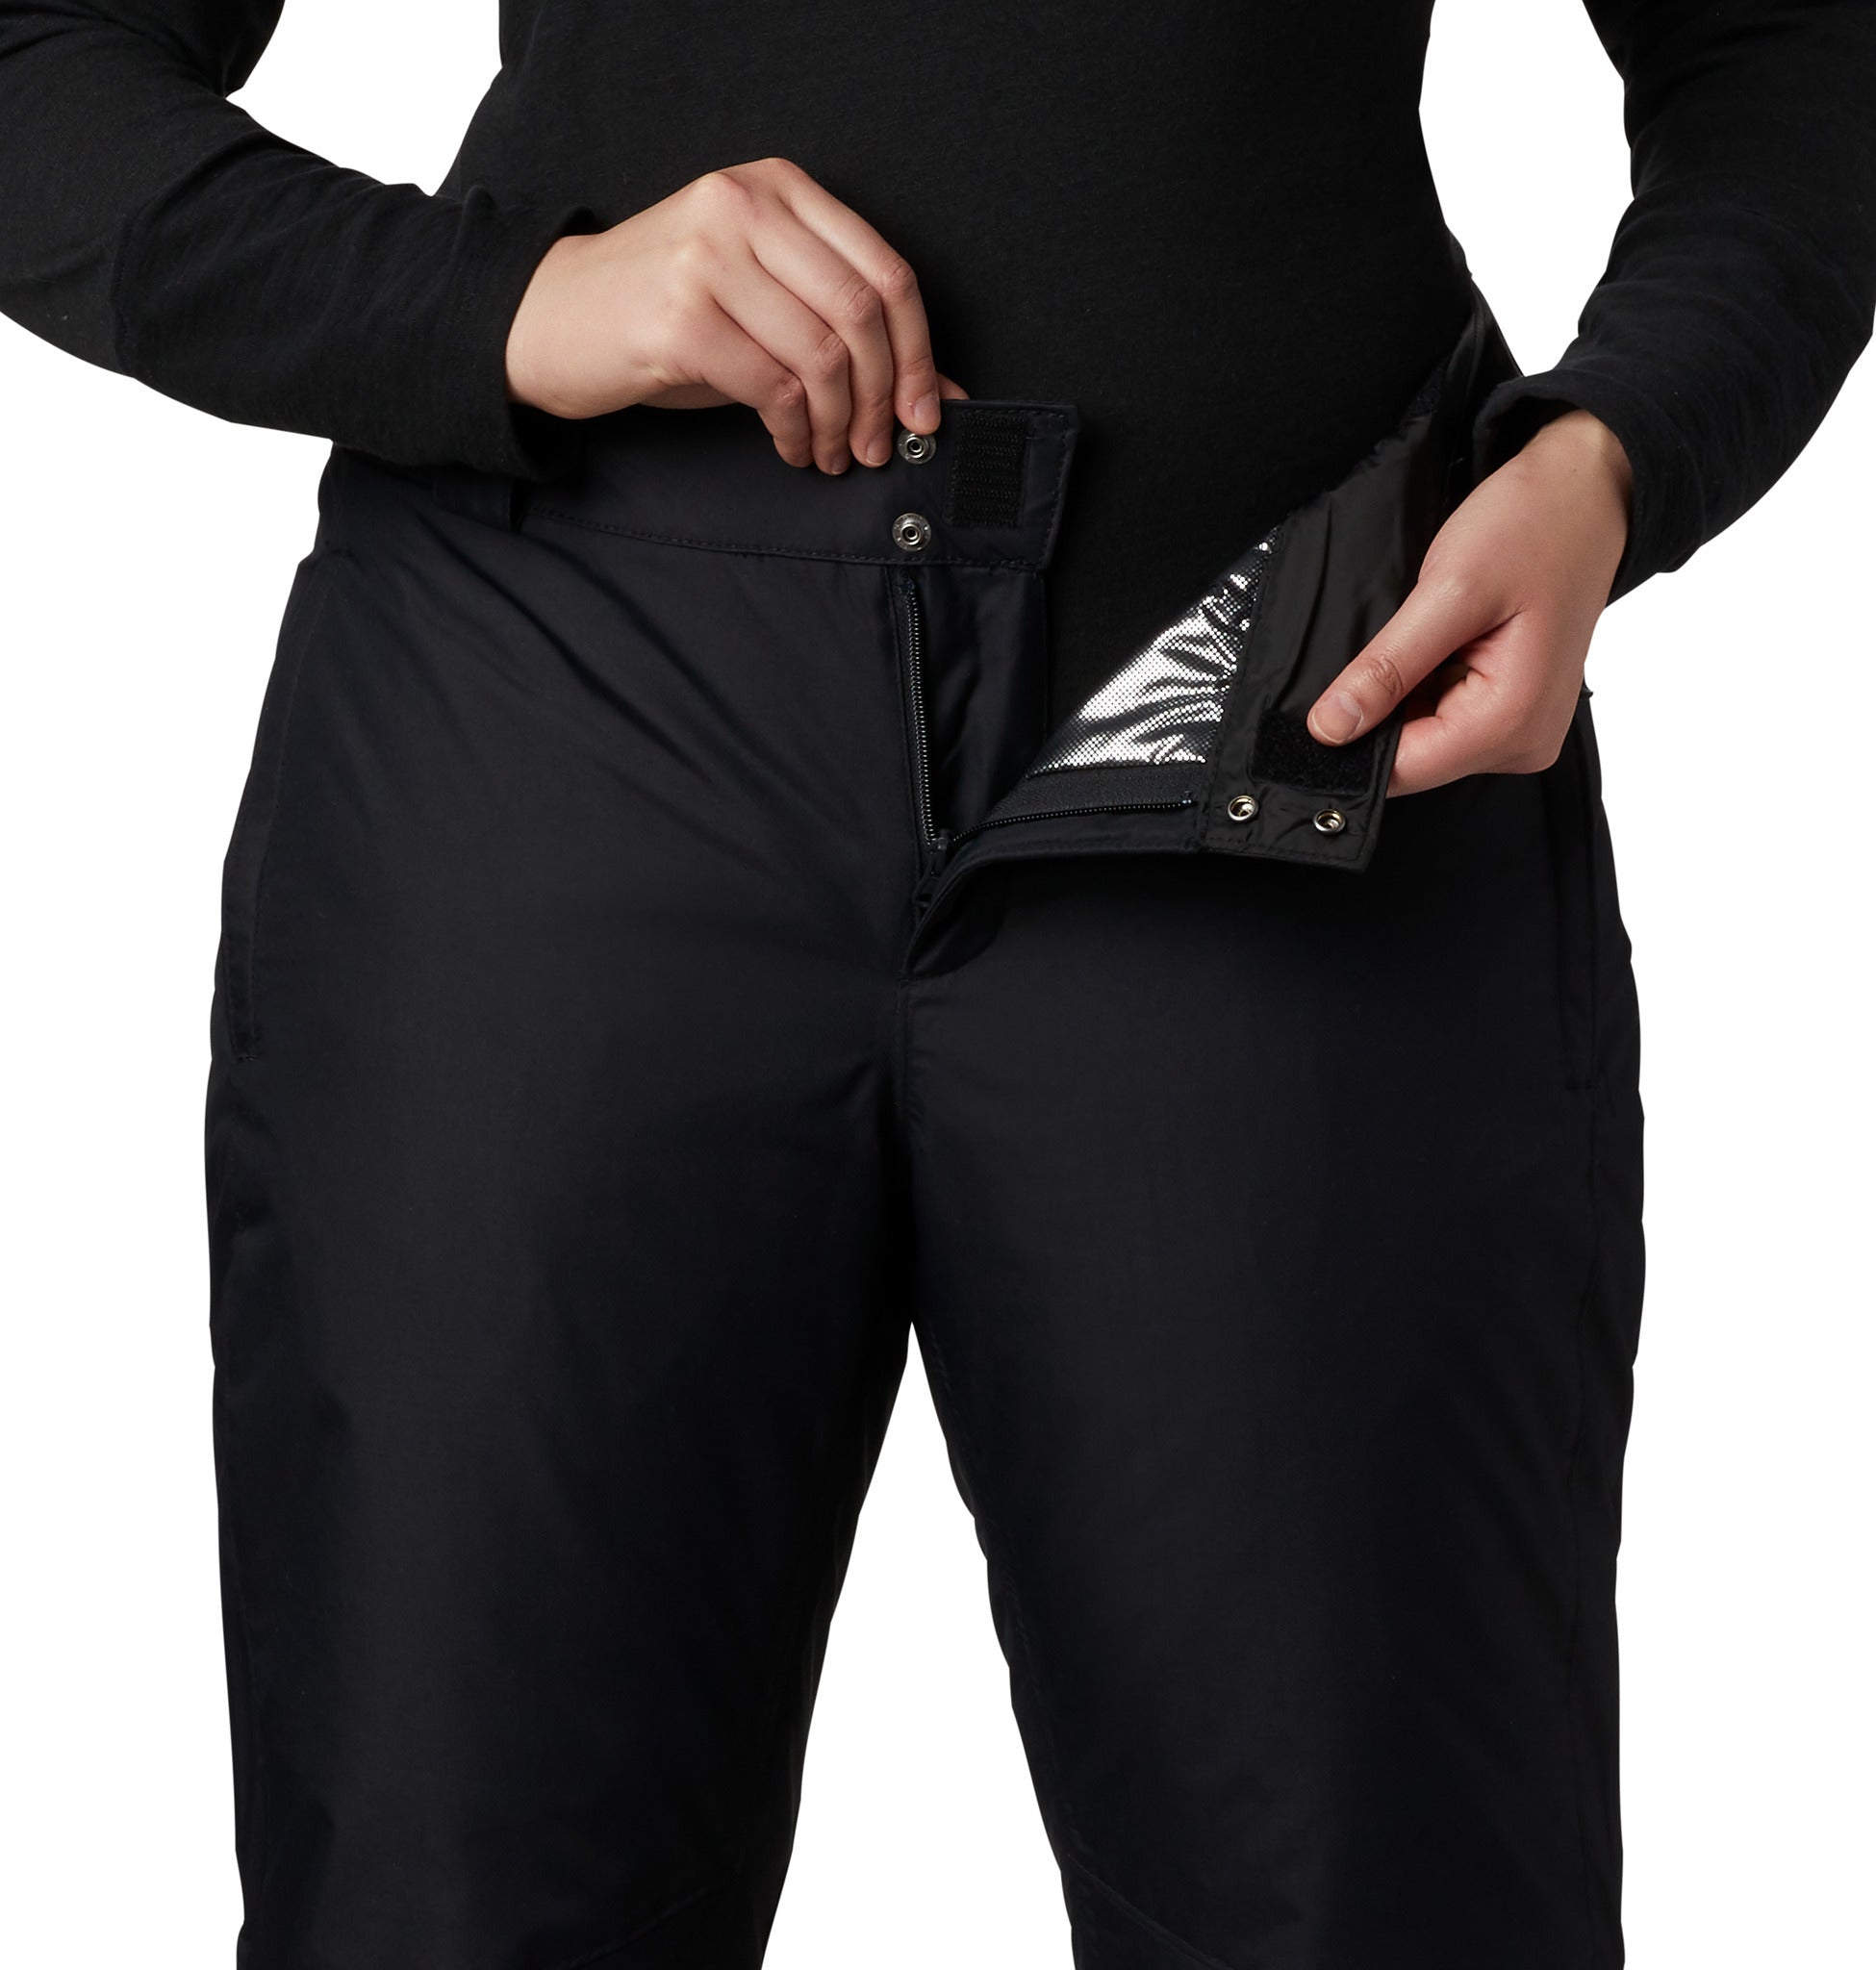 Women's Bugaboo™ Omni-Heat™ Ski Trouser